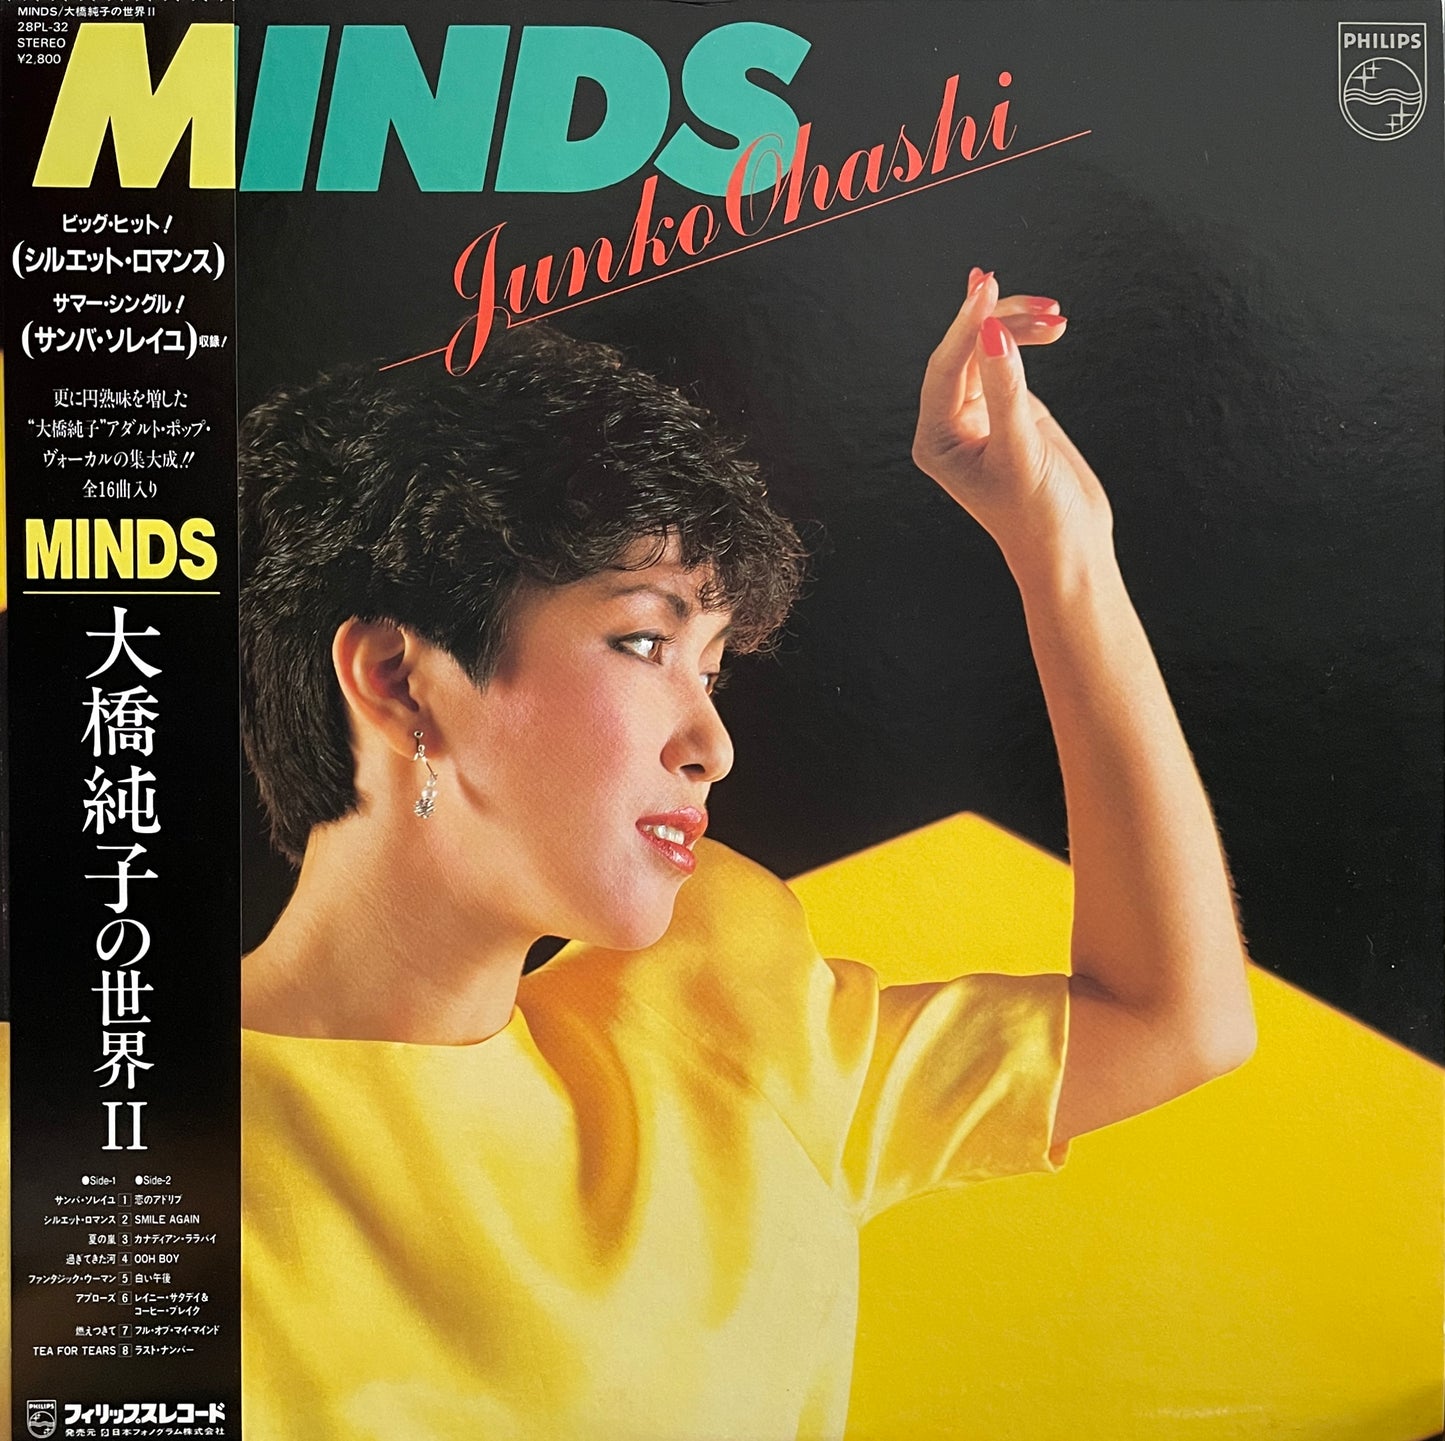 Junko Ohashi - Minds (1982)